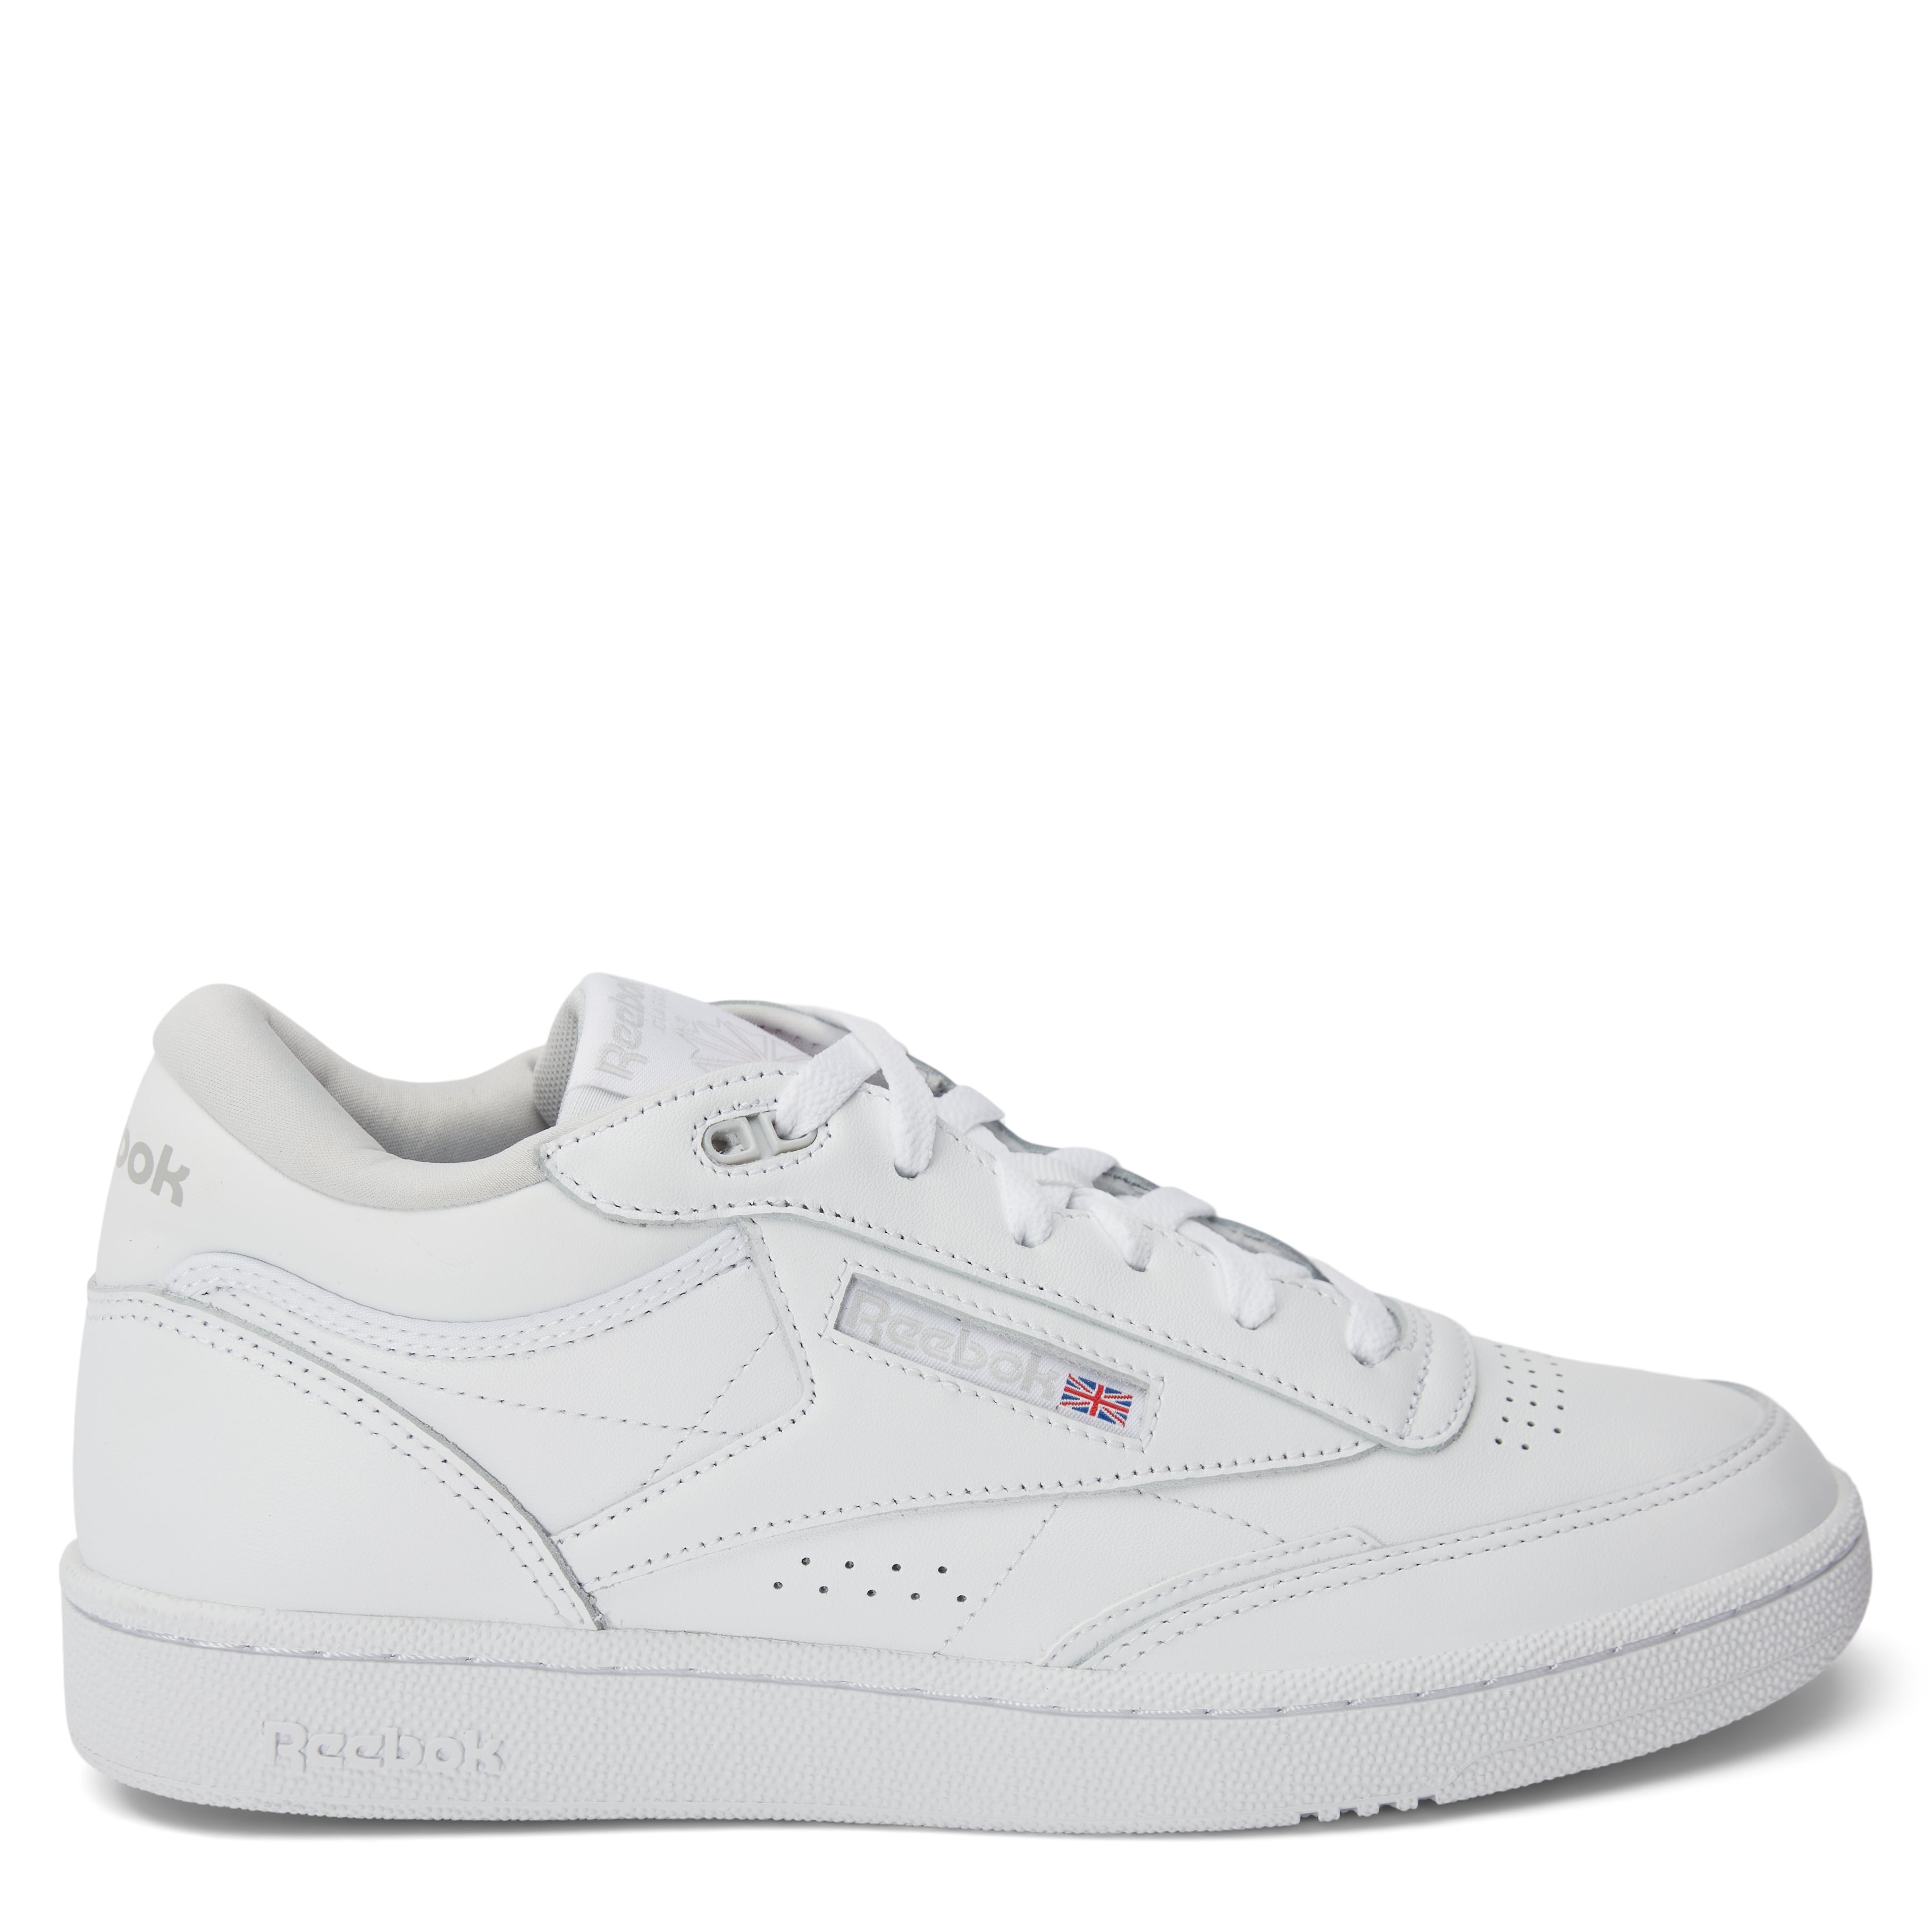 Club C Mid II Sneaker - Shoes - White